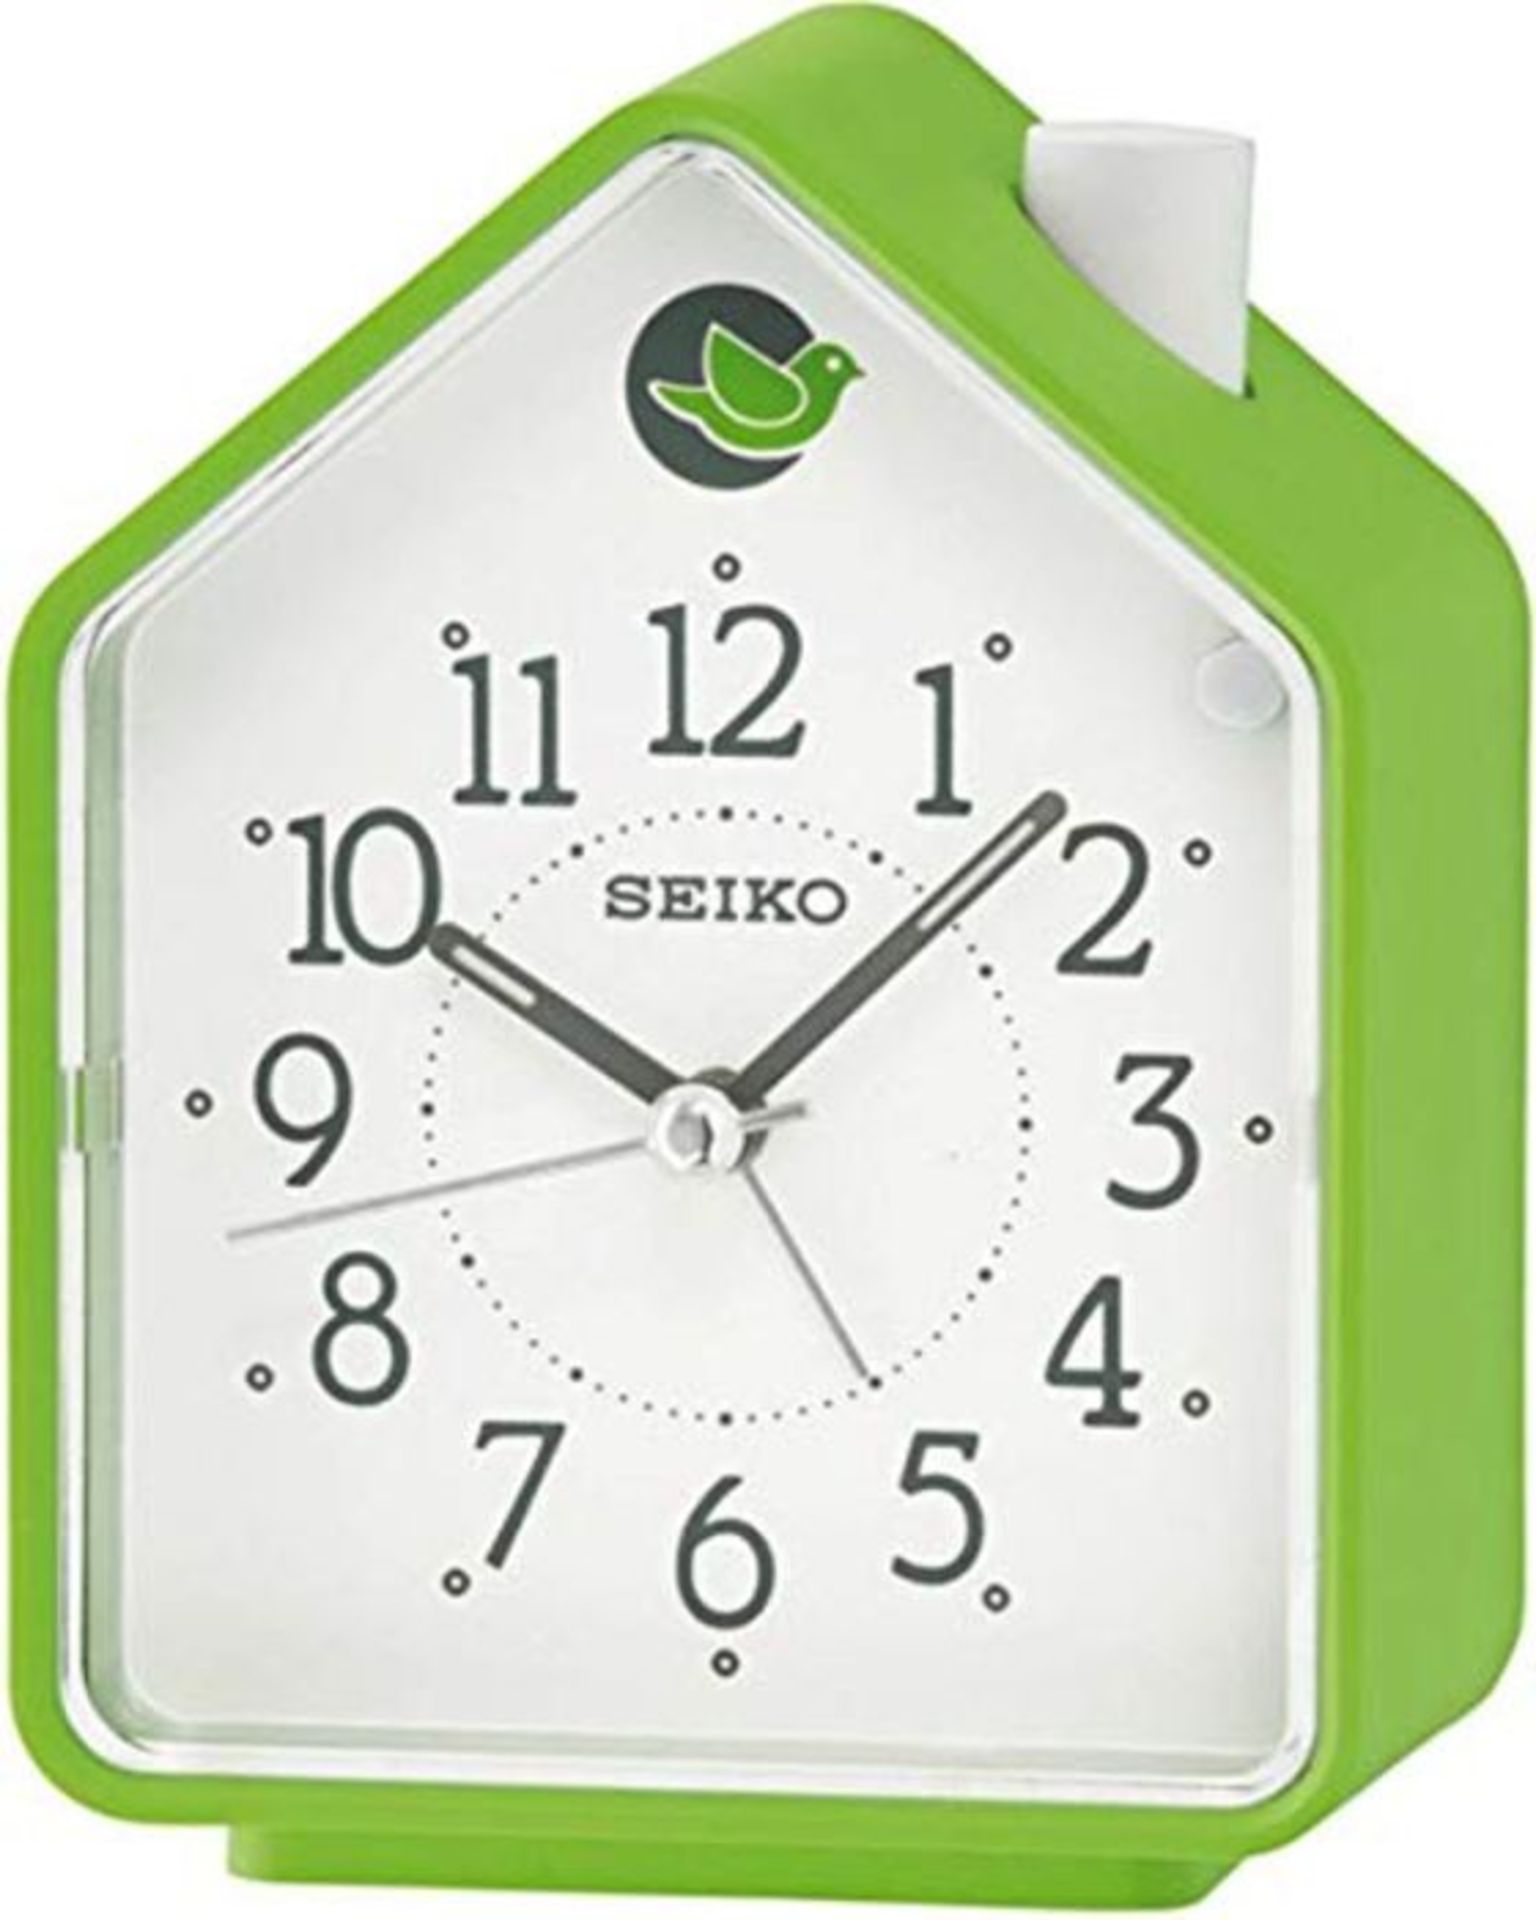 Seiko Bird House Analogue Alarm Clock Green Plastic - QHP002M